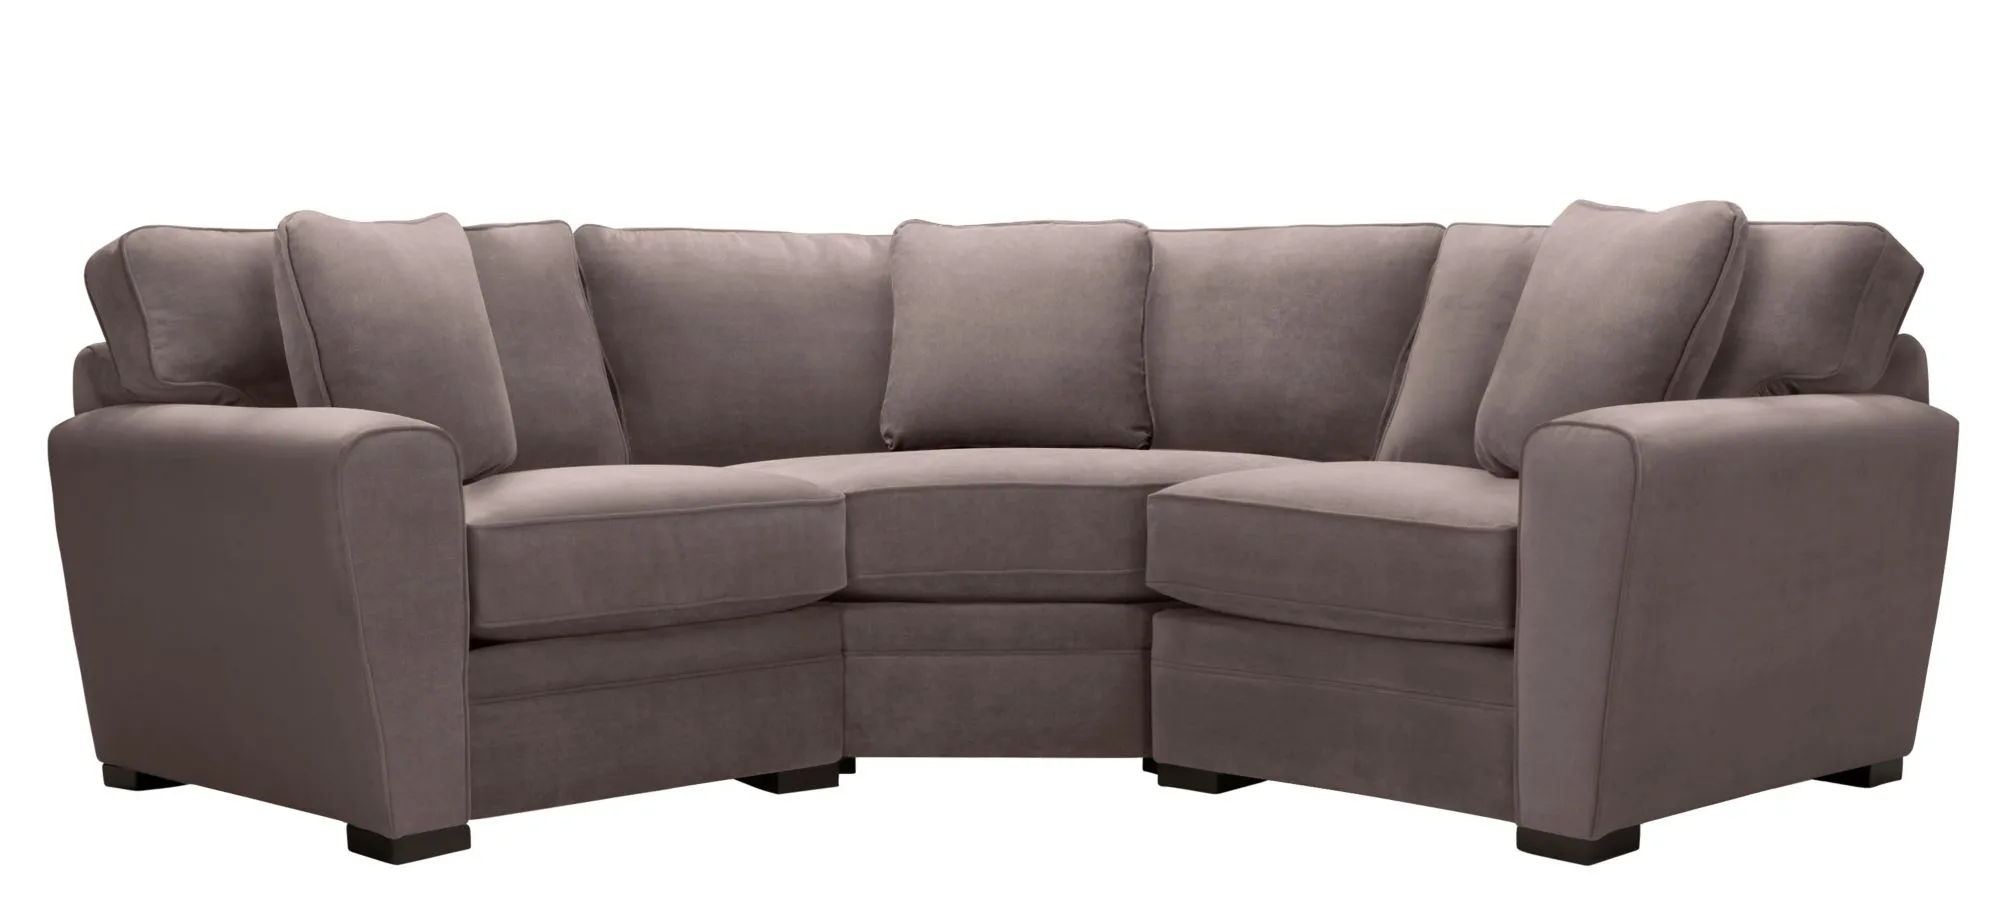 Artemis II 3-pc. Symmetrical Sectional Sofa in Gypsy Truffle by Jonathan Louis